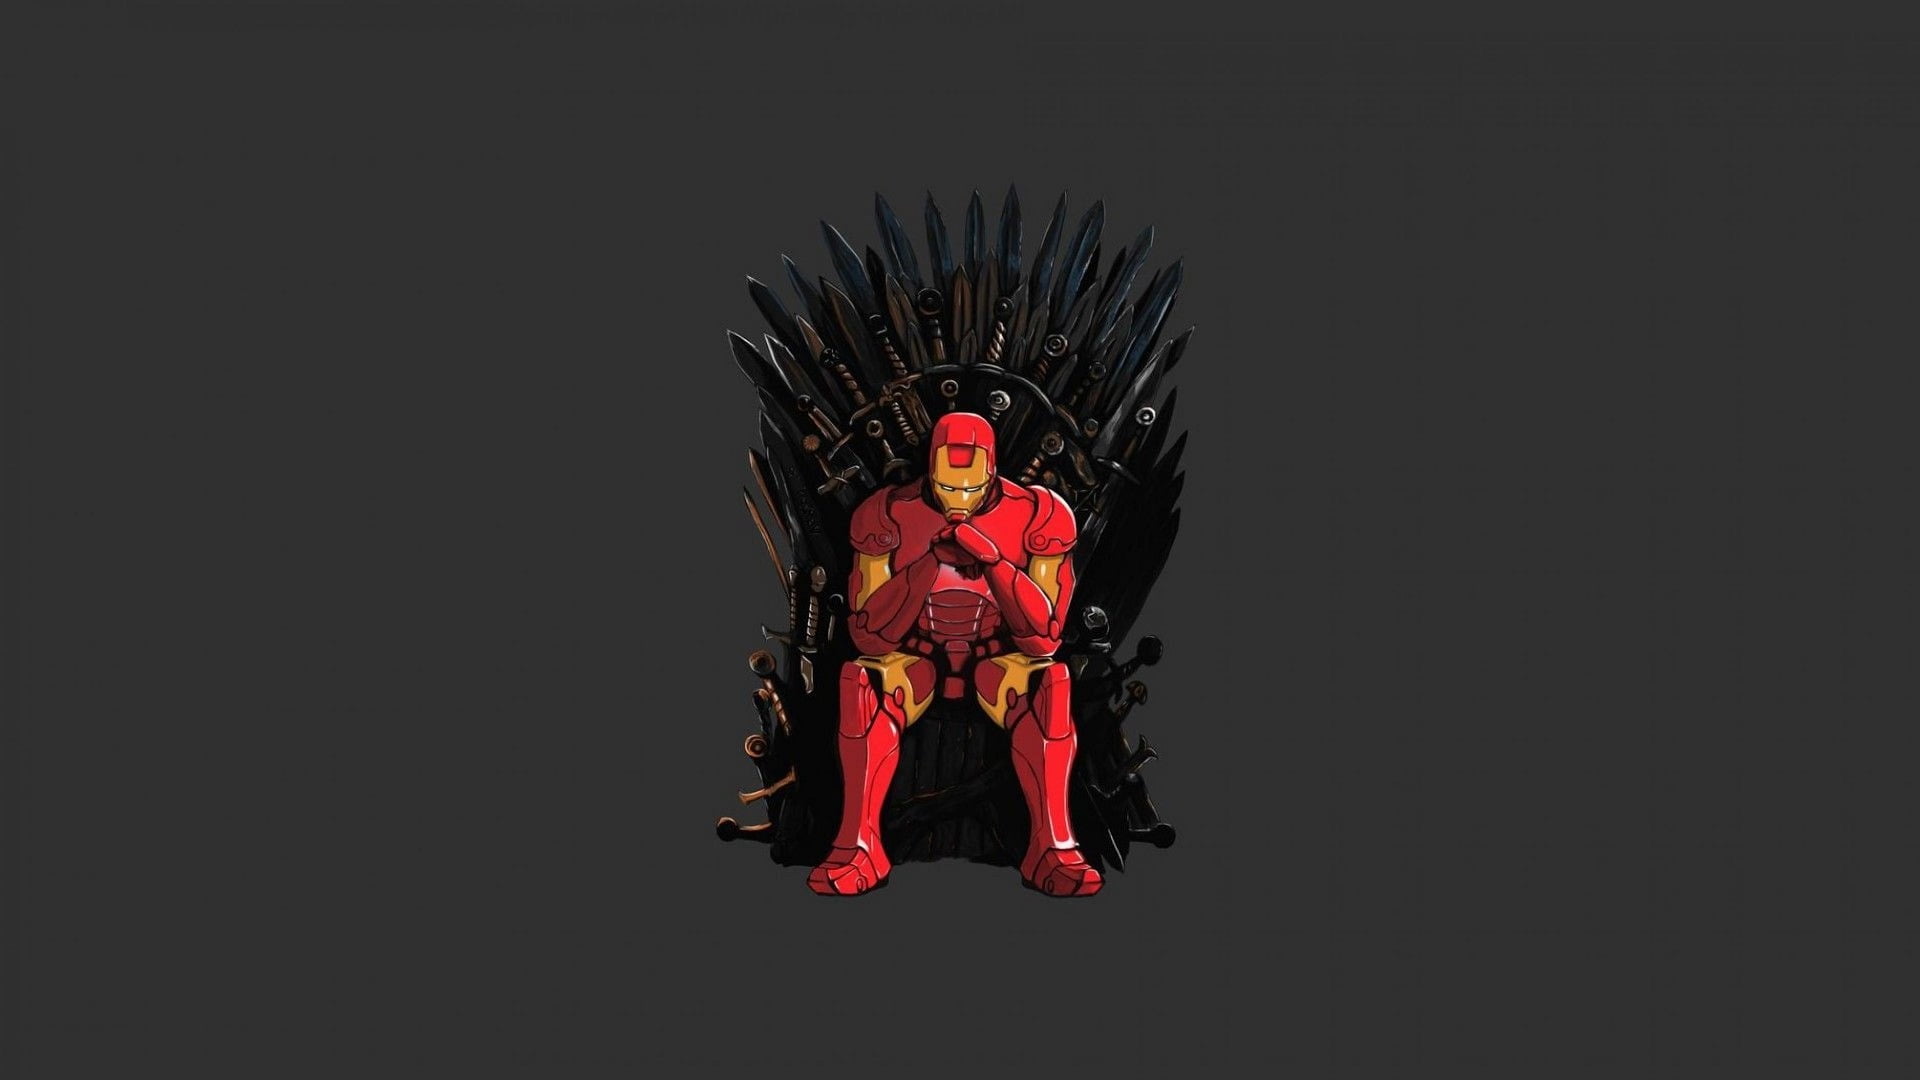 Marvel Iron Man wallpaper, Iron Man, Game of Thrones, Iron Throne, crossover